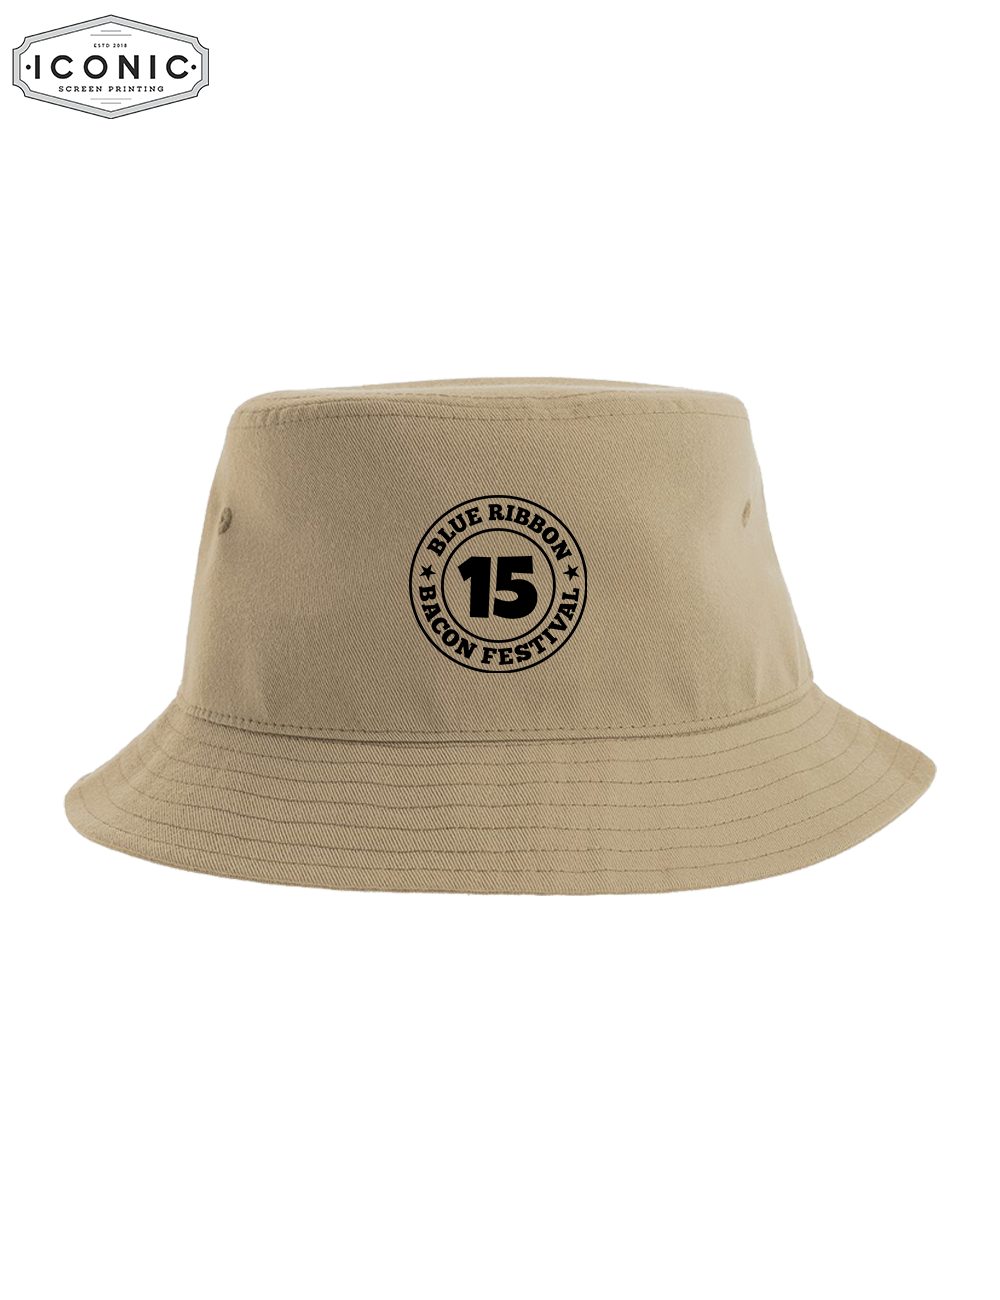 Des Moines Bacon Fest - Atlantis Headwear - Sustainable Bucket Hat